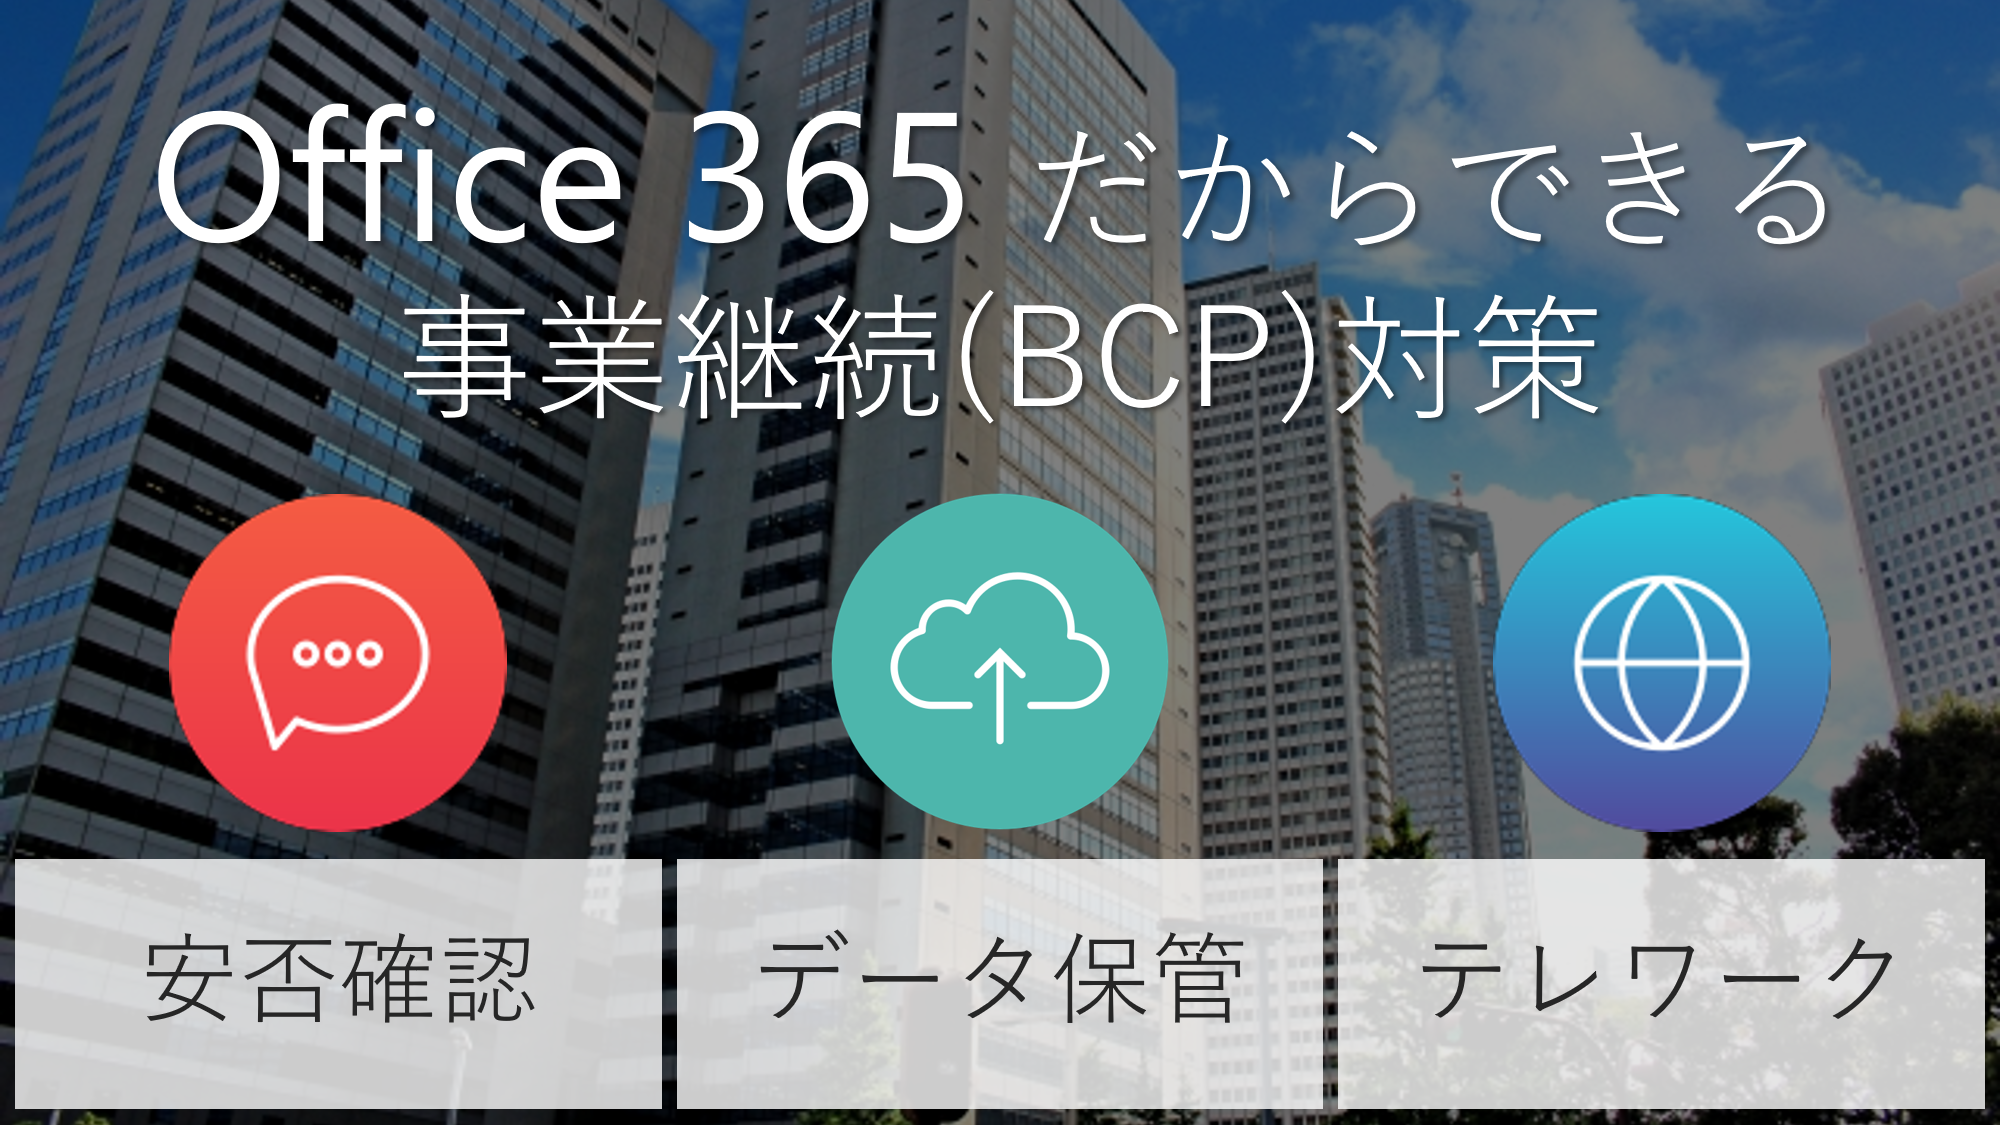 https://licensecounter.jp/office365/blog/katsuyo-bcp.png